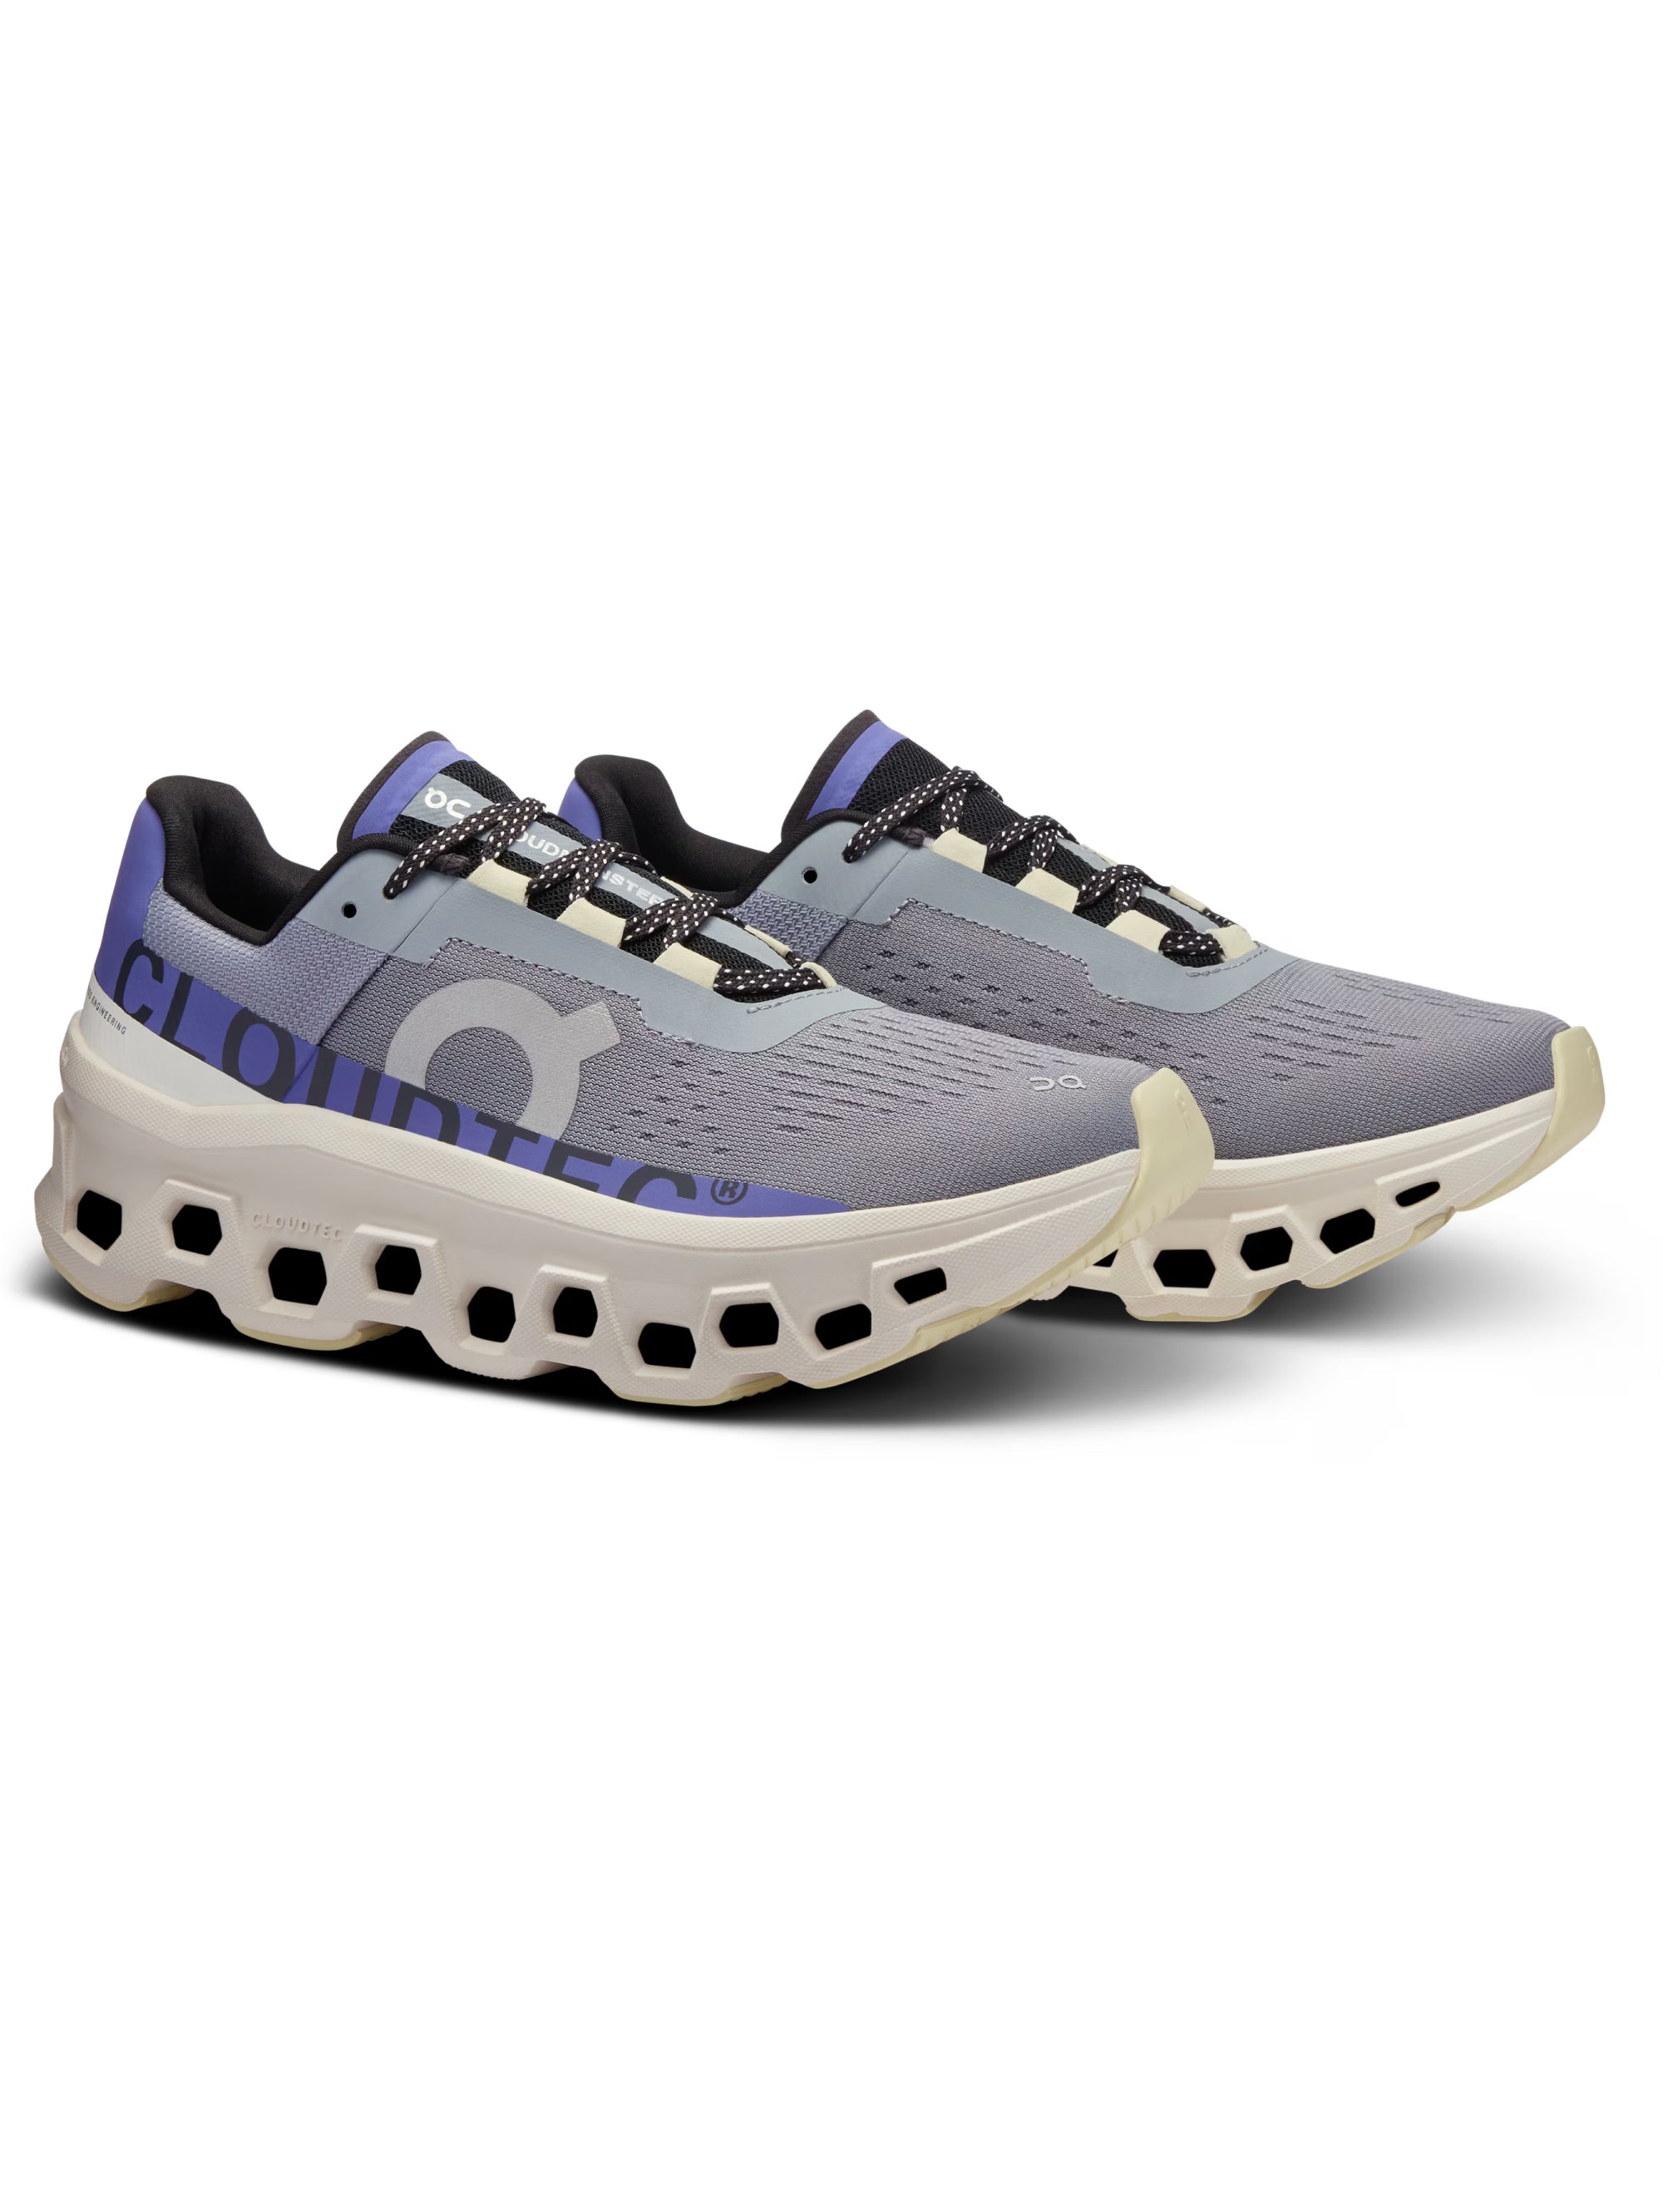 Blueberry Cloudmonster Men's Sneakers